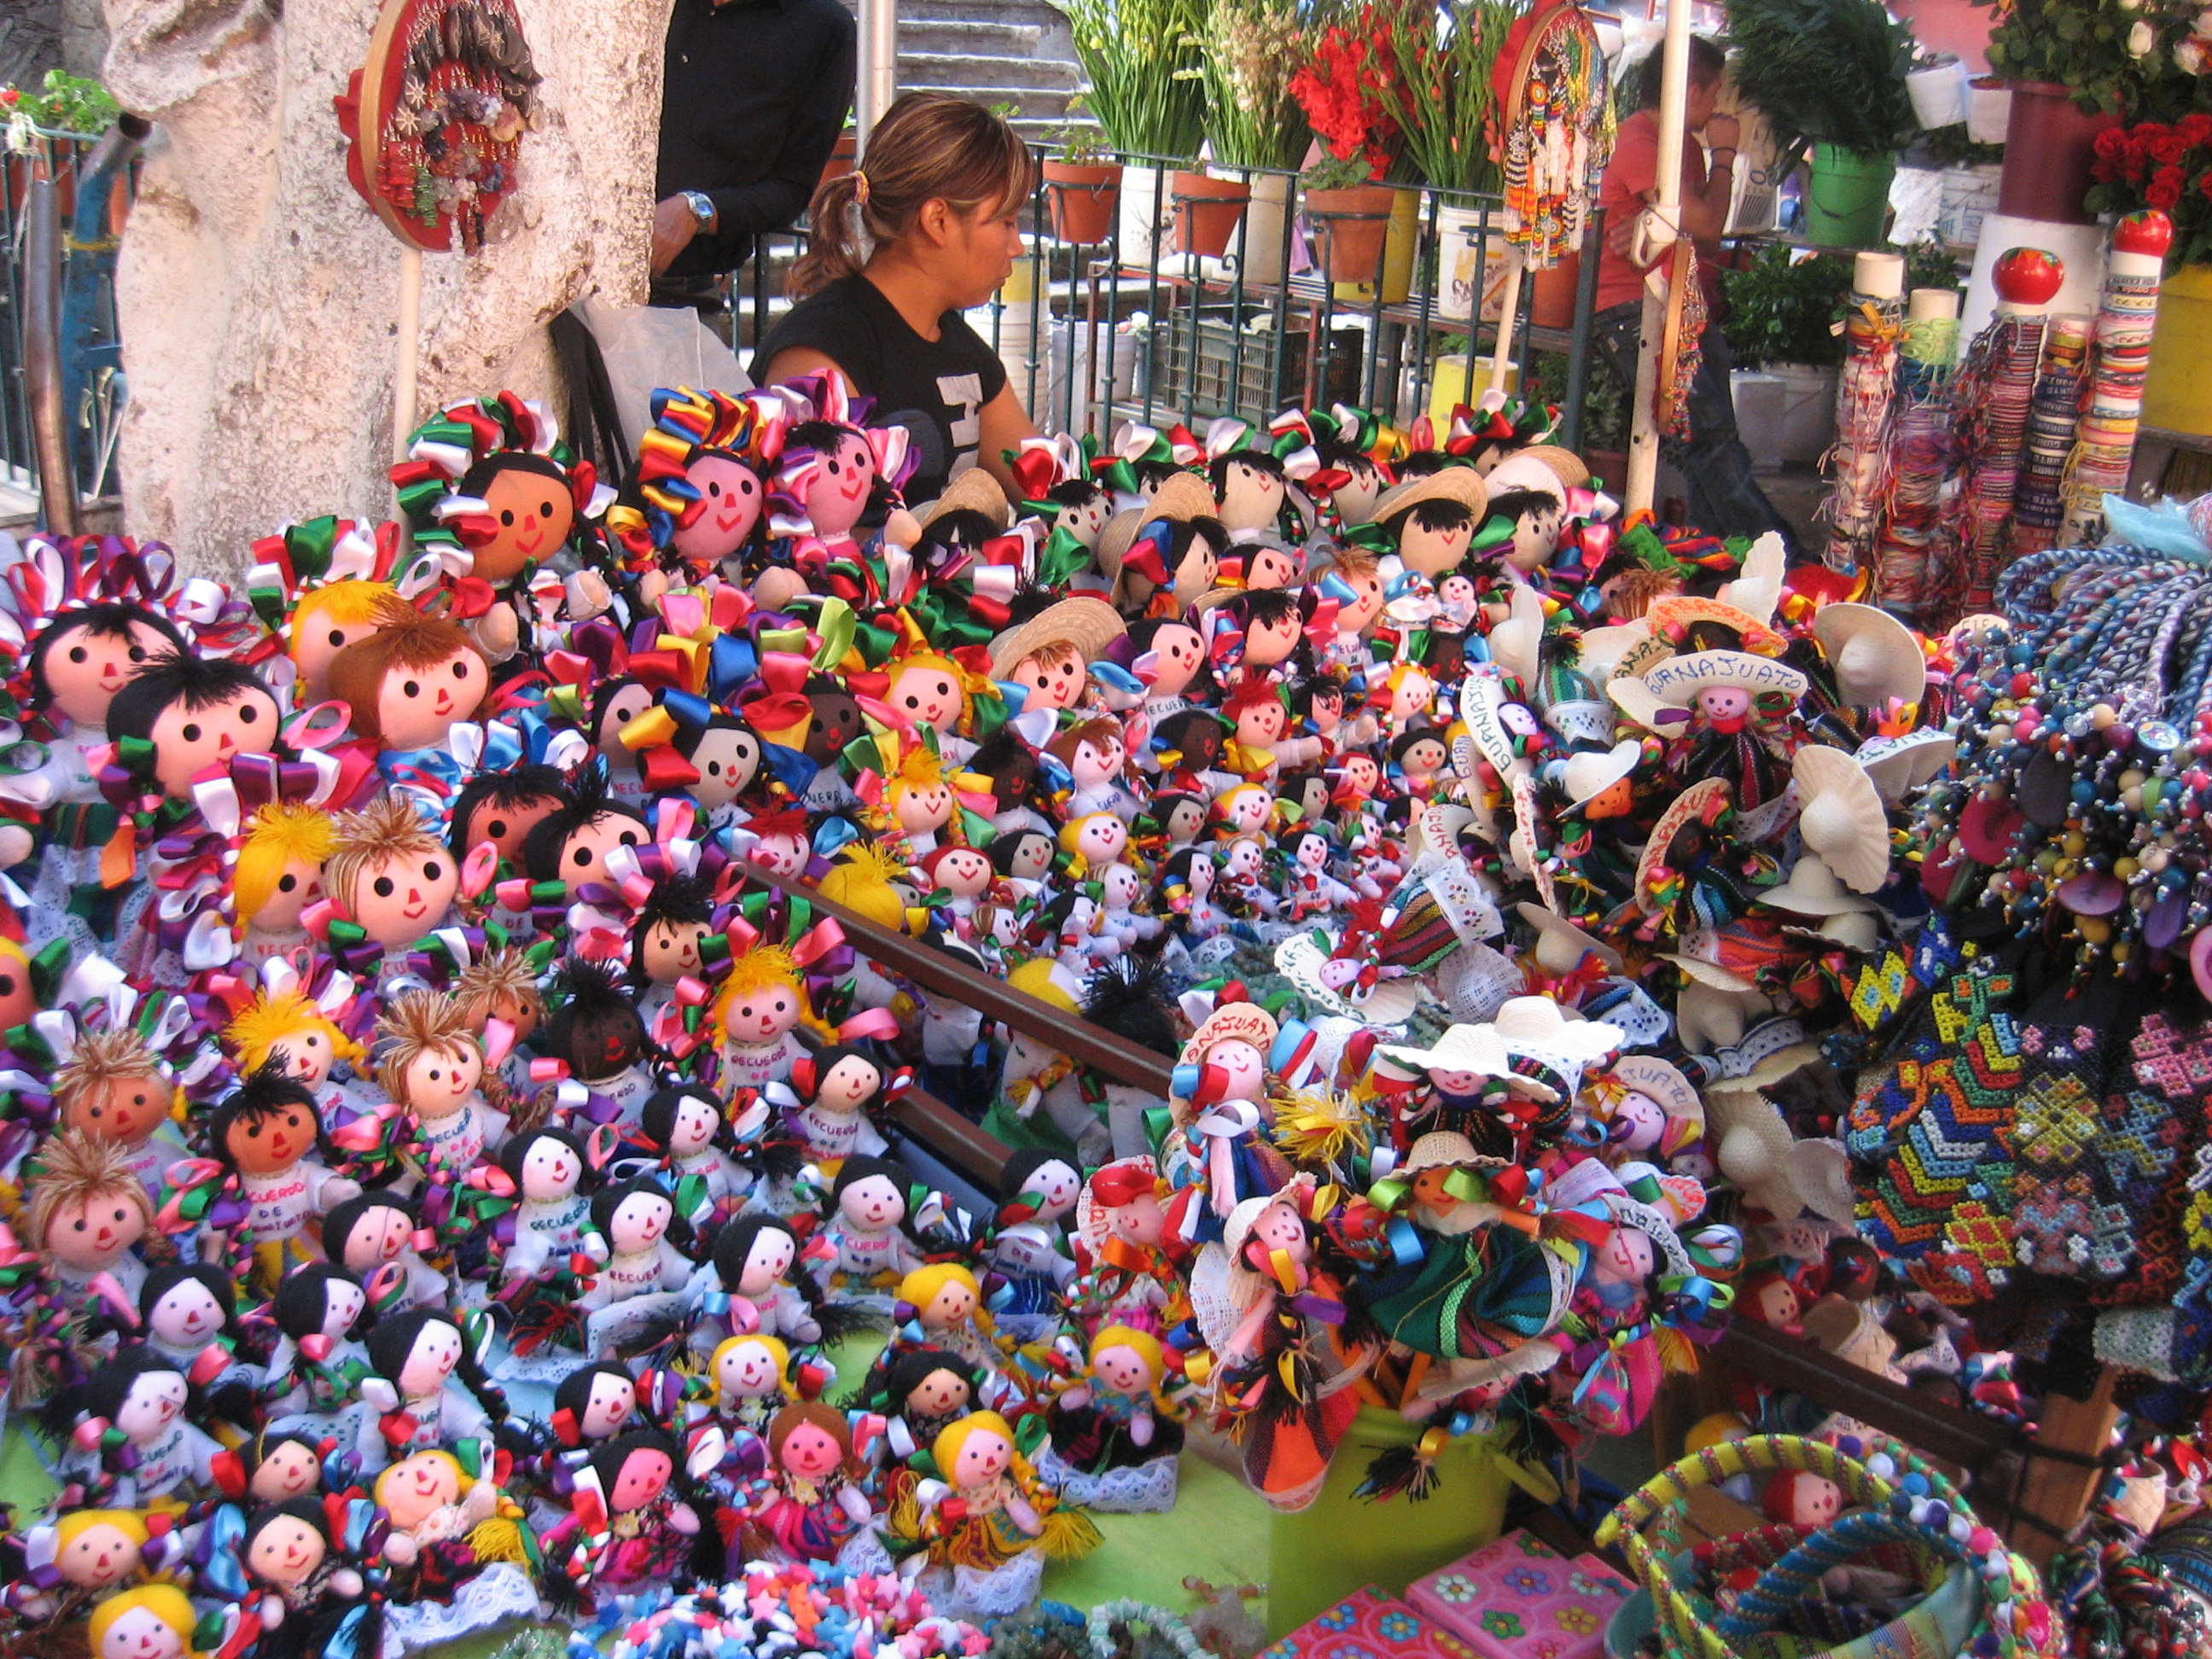 Children selling dolls at a stand in Monterrey